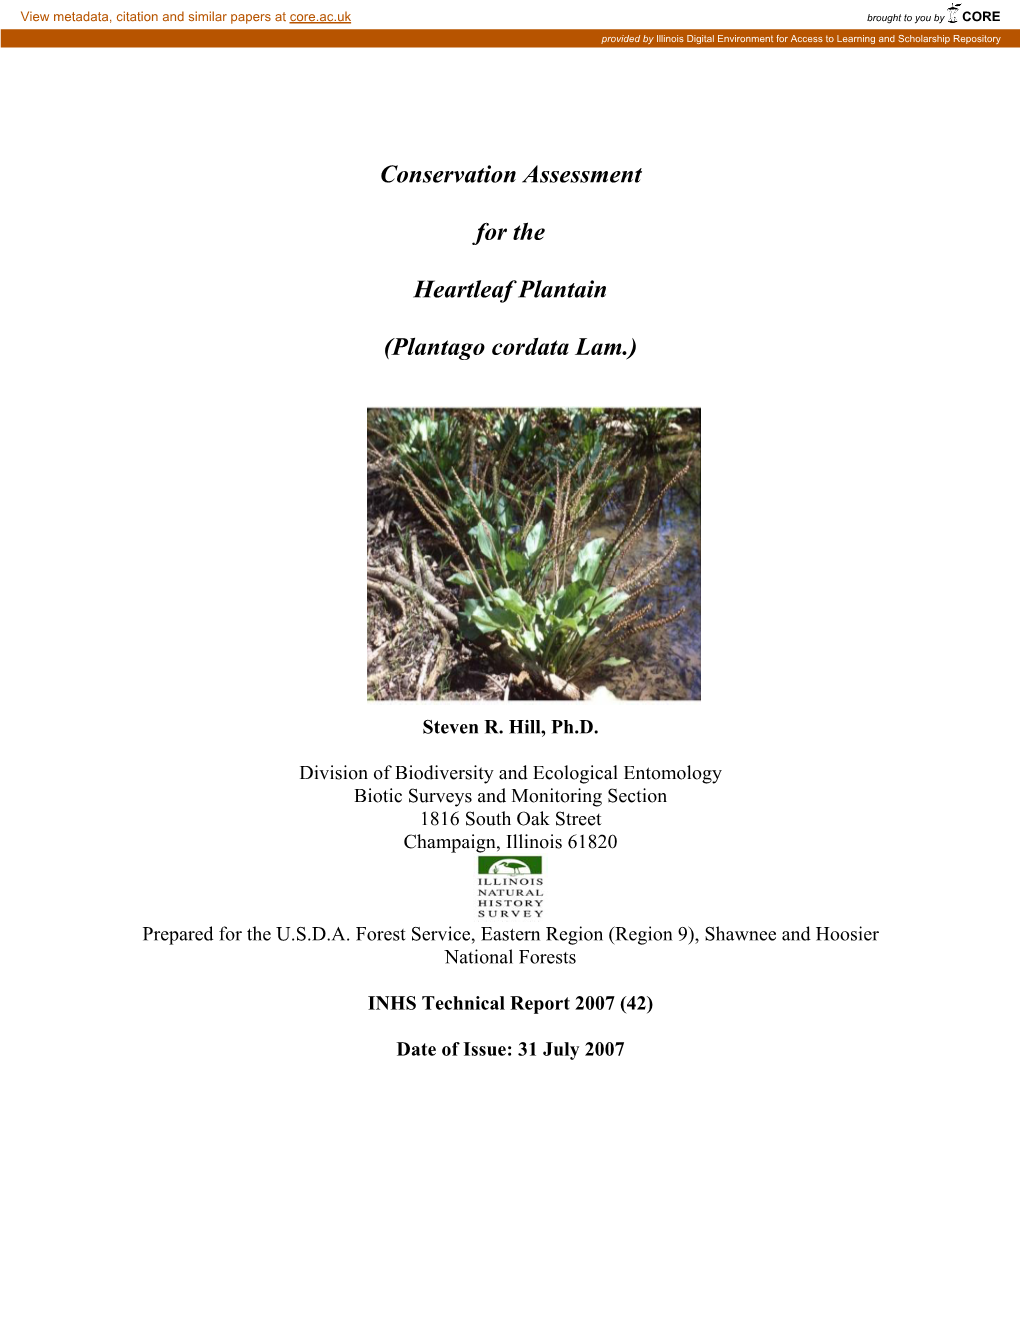 Conservation Assessment for the Heartleaf Plantain (Plantago Cordata Lam.)